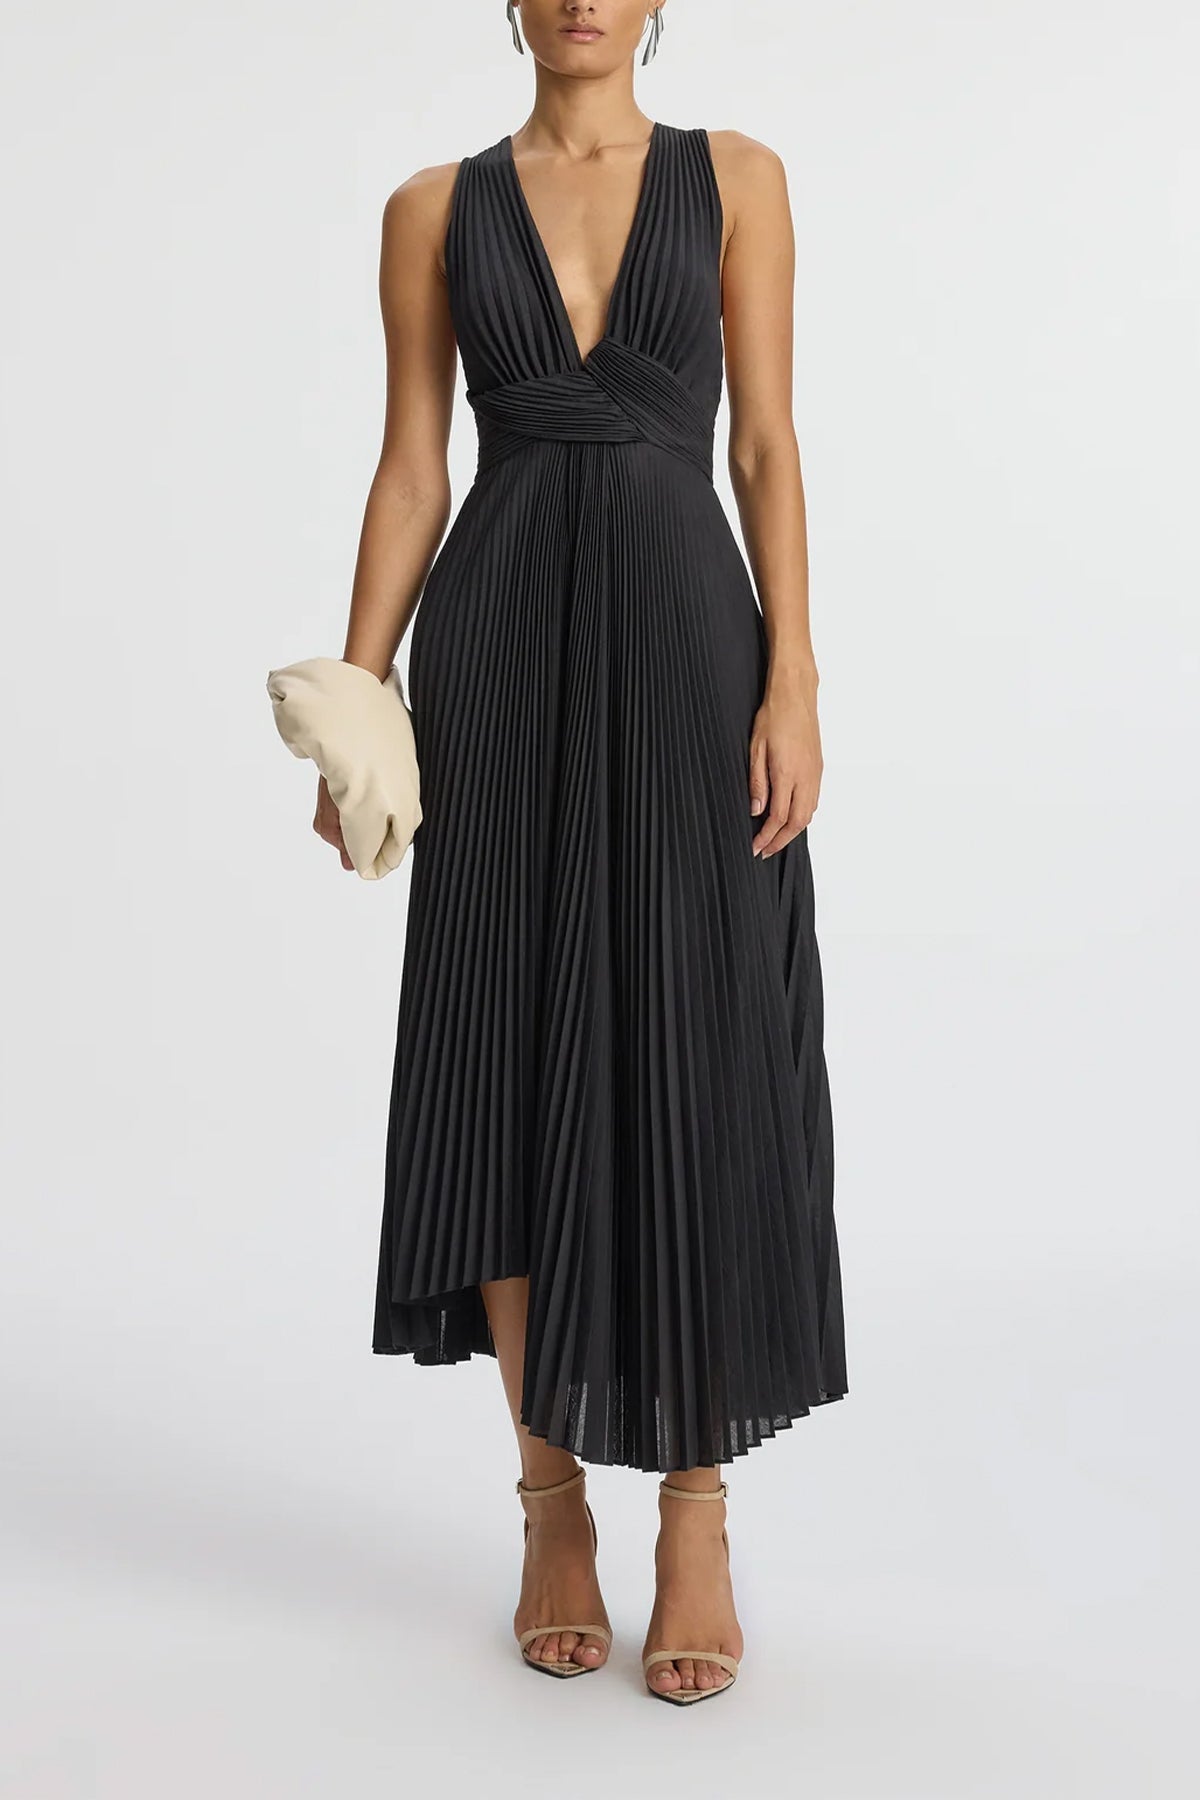 Everly Pleated Midi Dress in Black - shop-olivia.com